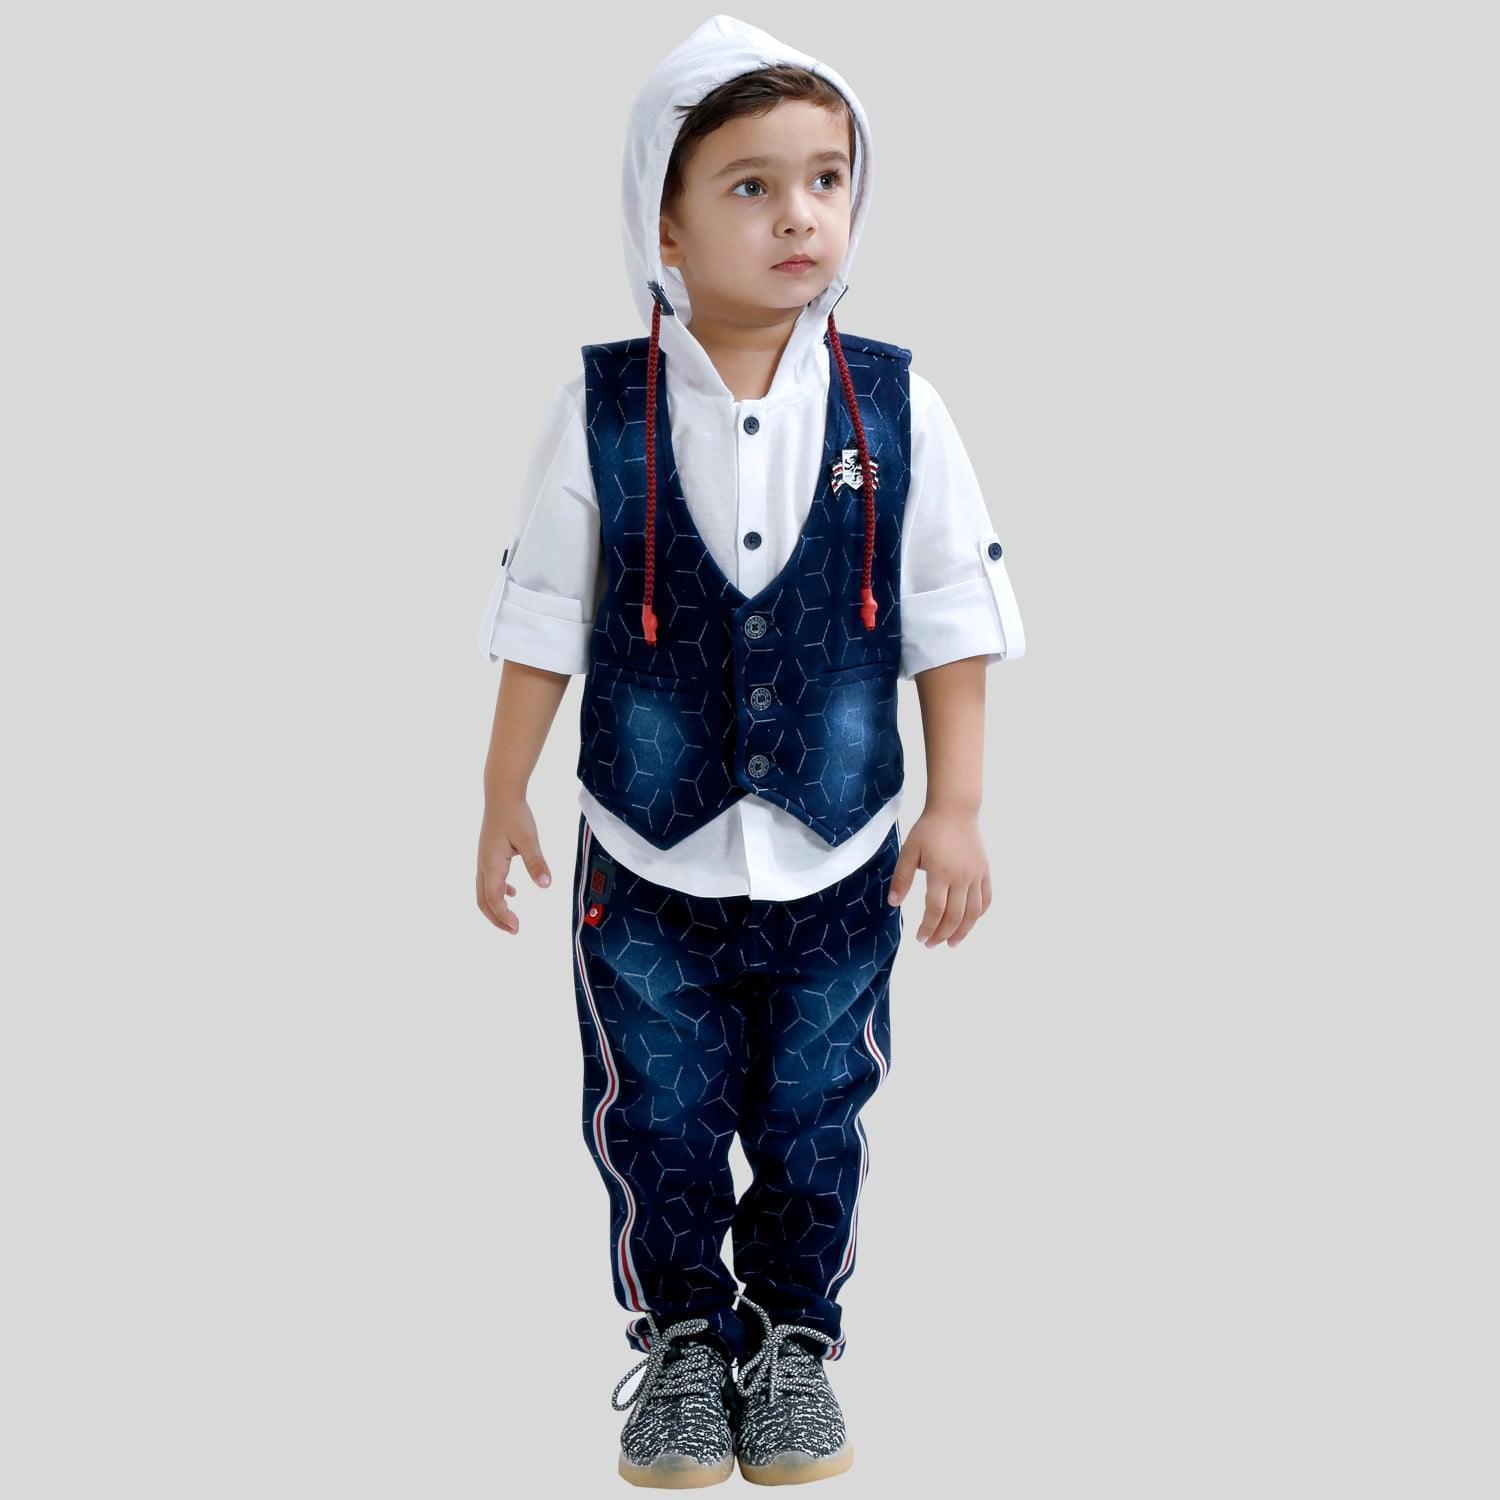 Infant Boy Partywear Kurta Pajama with Half Sleeve Jacket, 1-2 Year Old